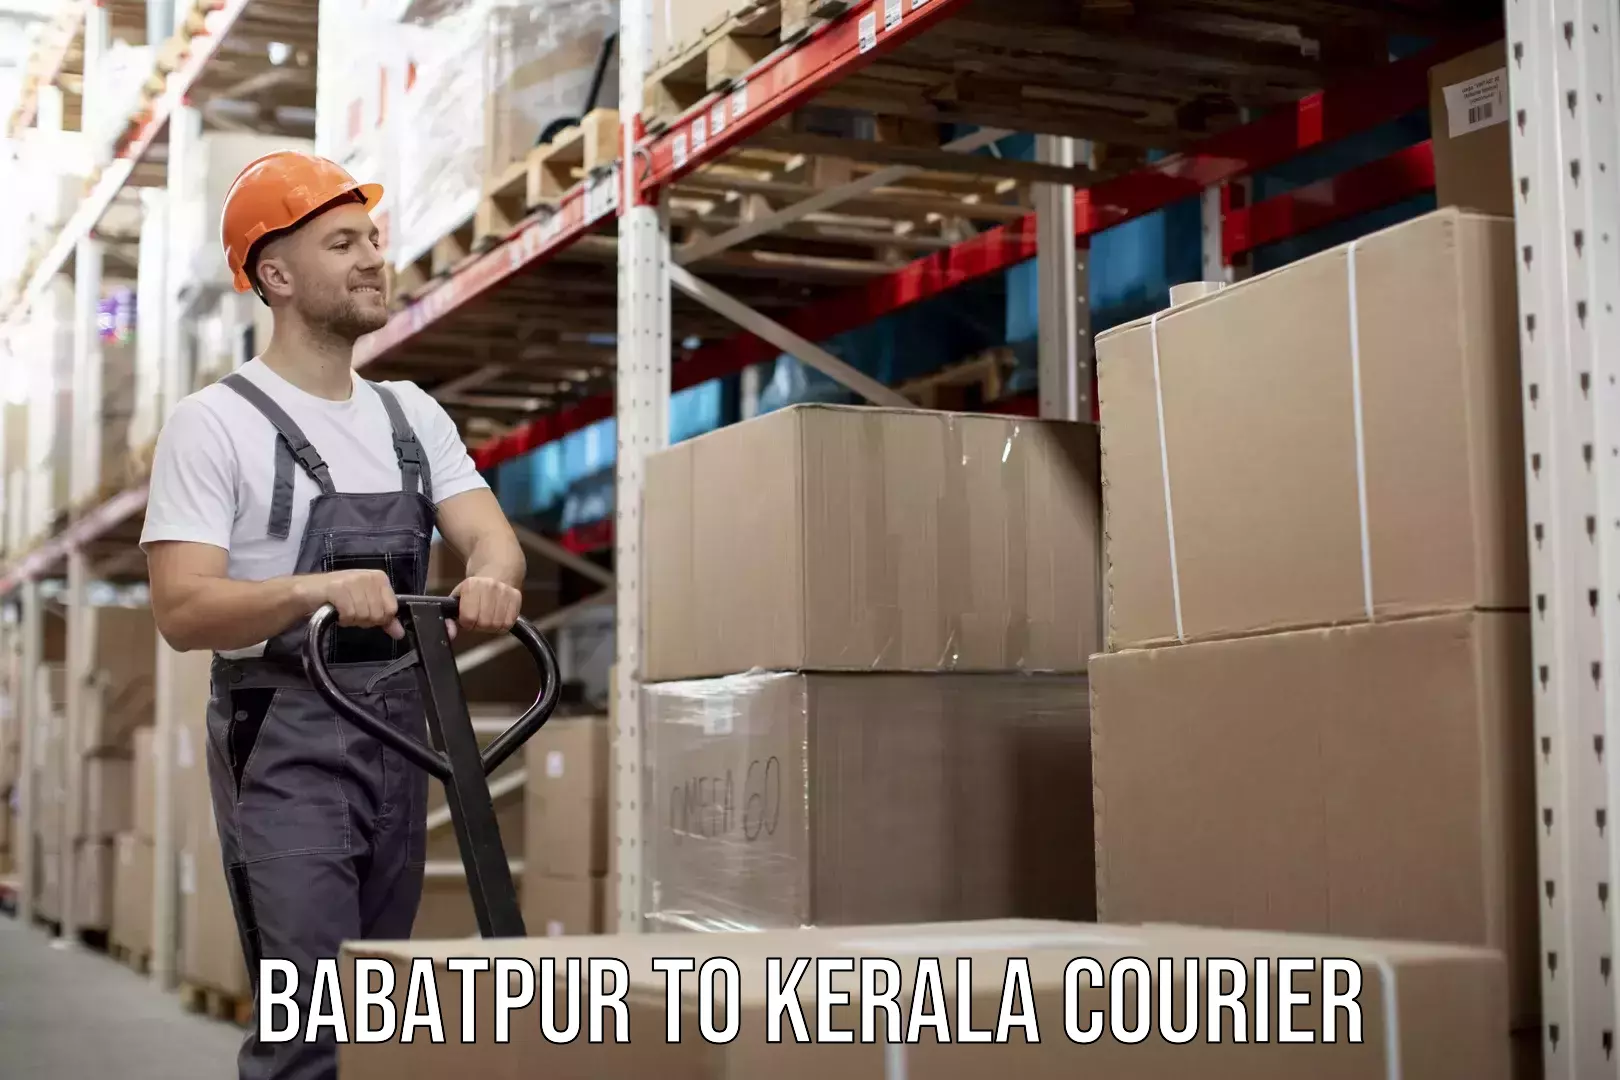 Professional courier handling Babatpur to Kerala